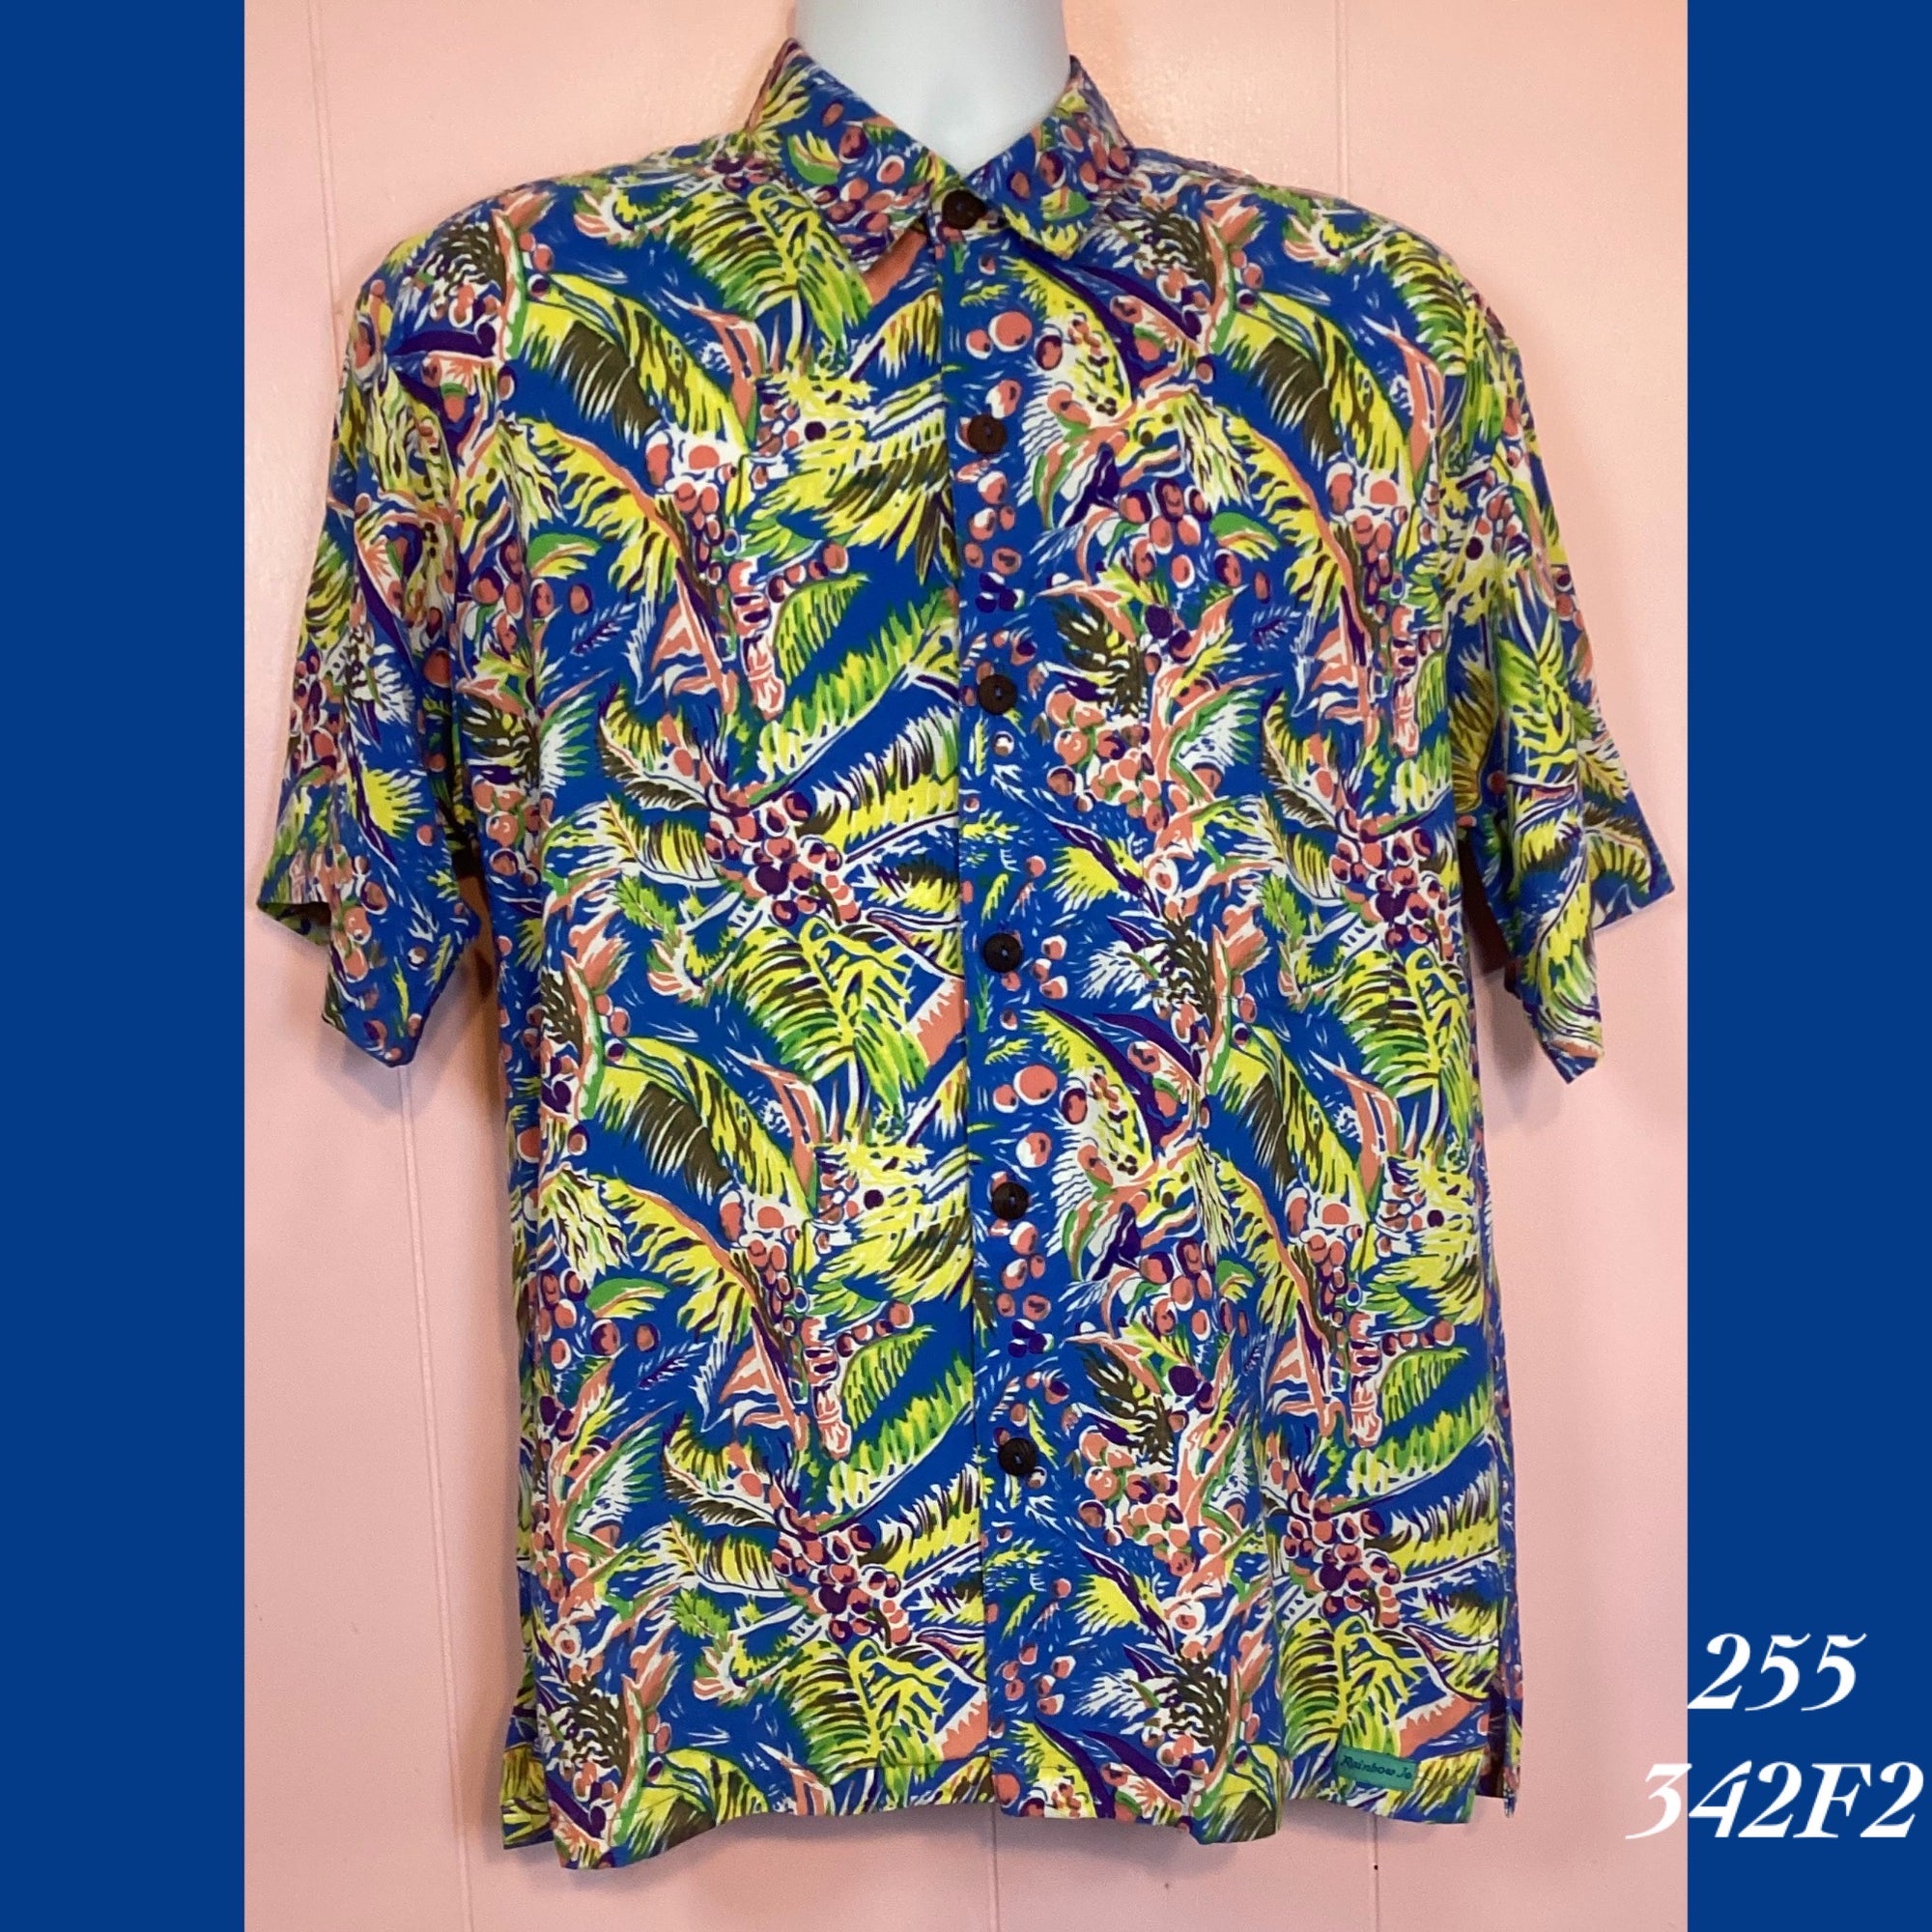 255 - 342F2 , Men's Aloha Shirt